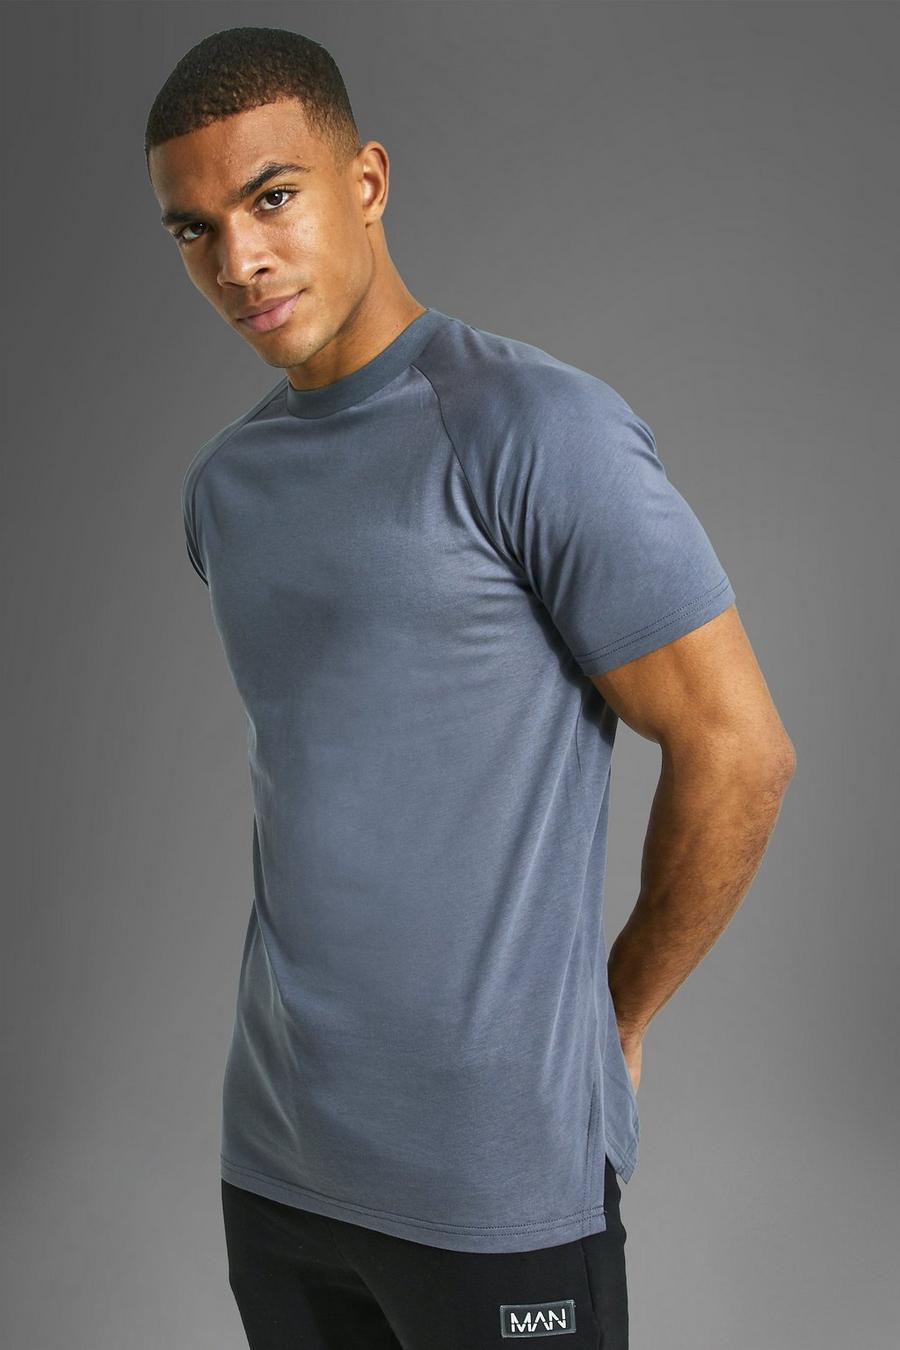 T-shirt Man Active Gym con spacco e maniche raglan, Charcoal grigio image number 1